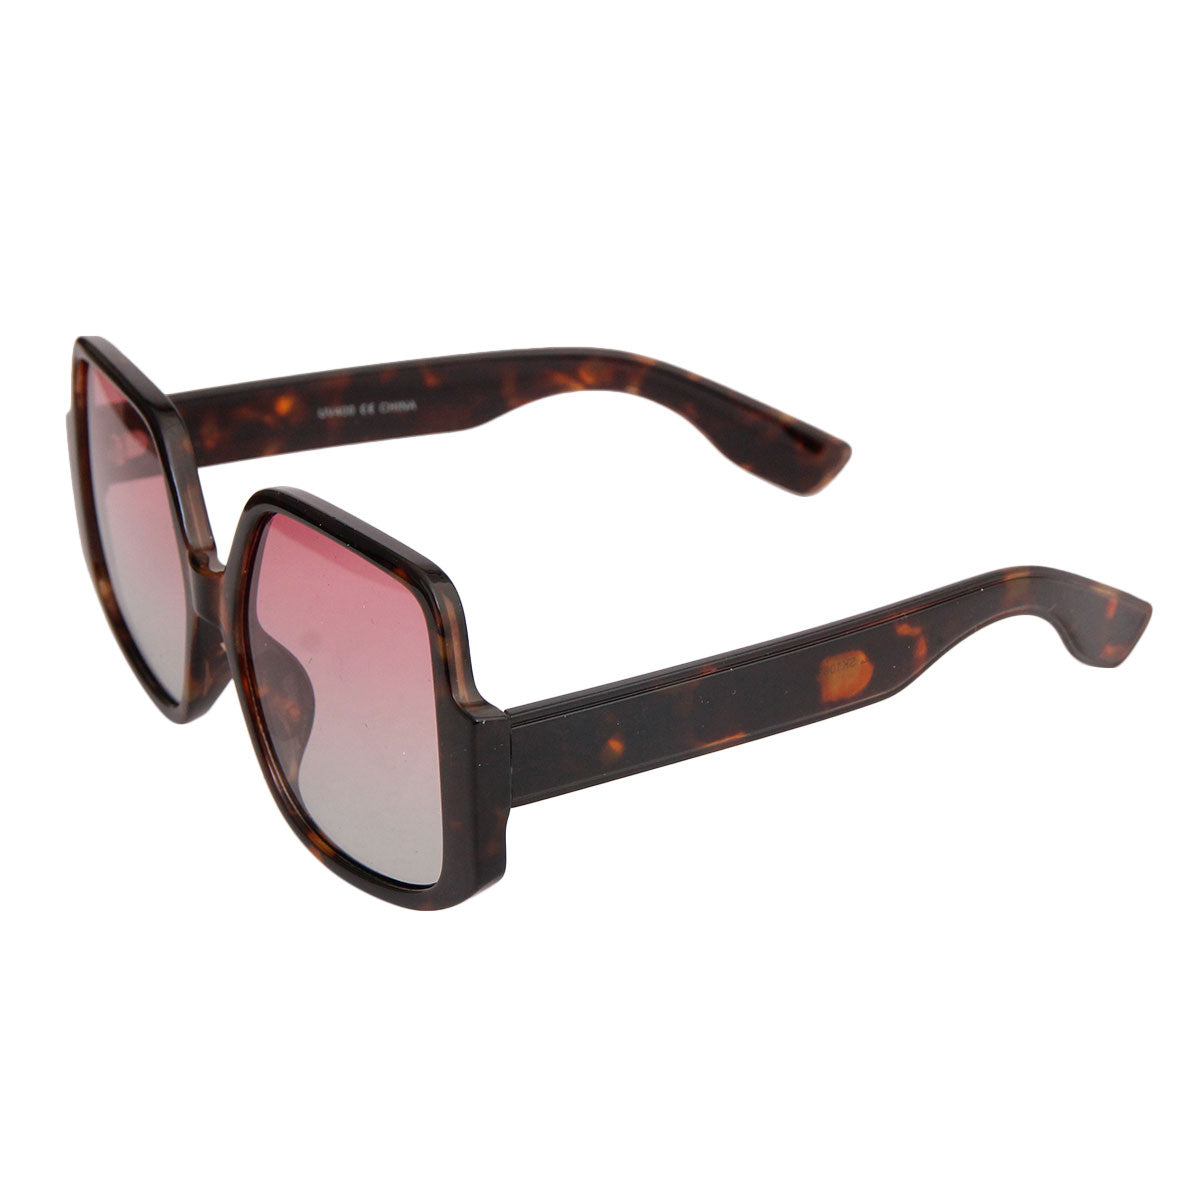 Retro Tortoiseshell Square Celine Style Sunglasses